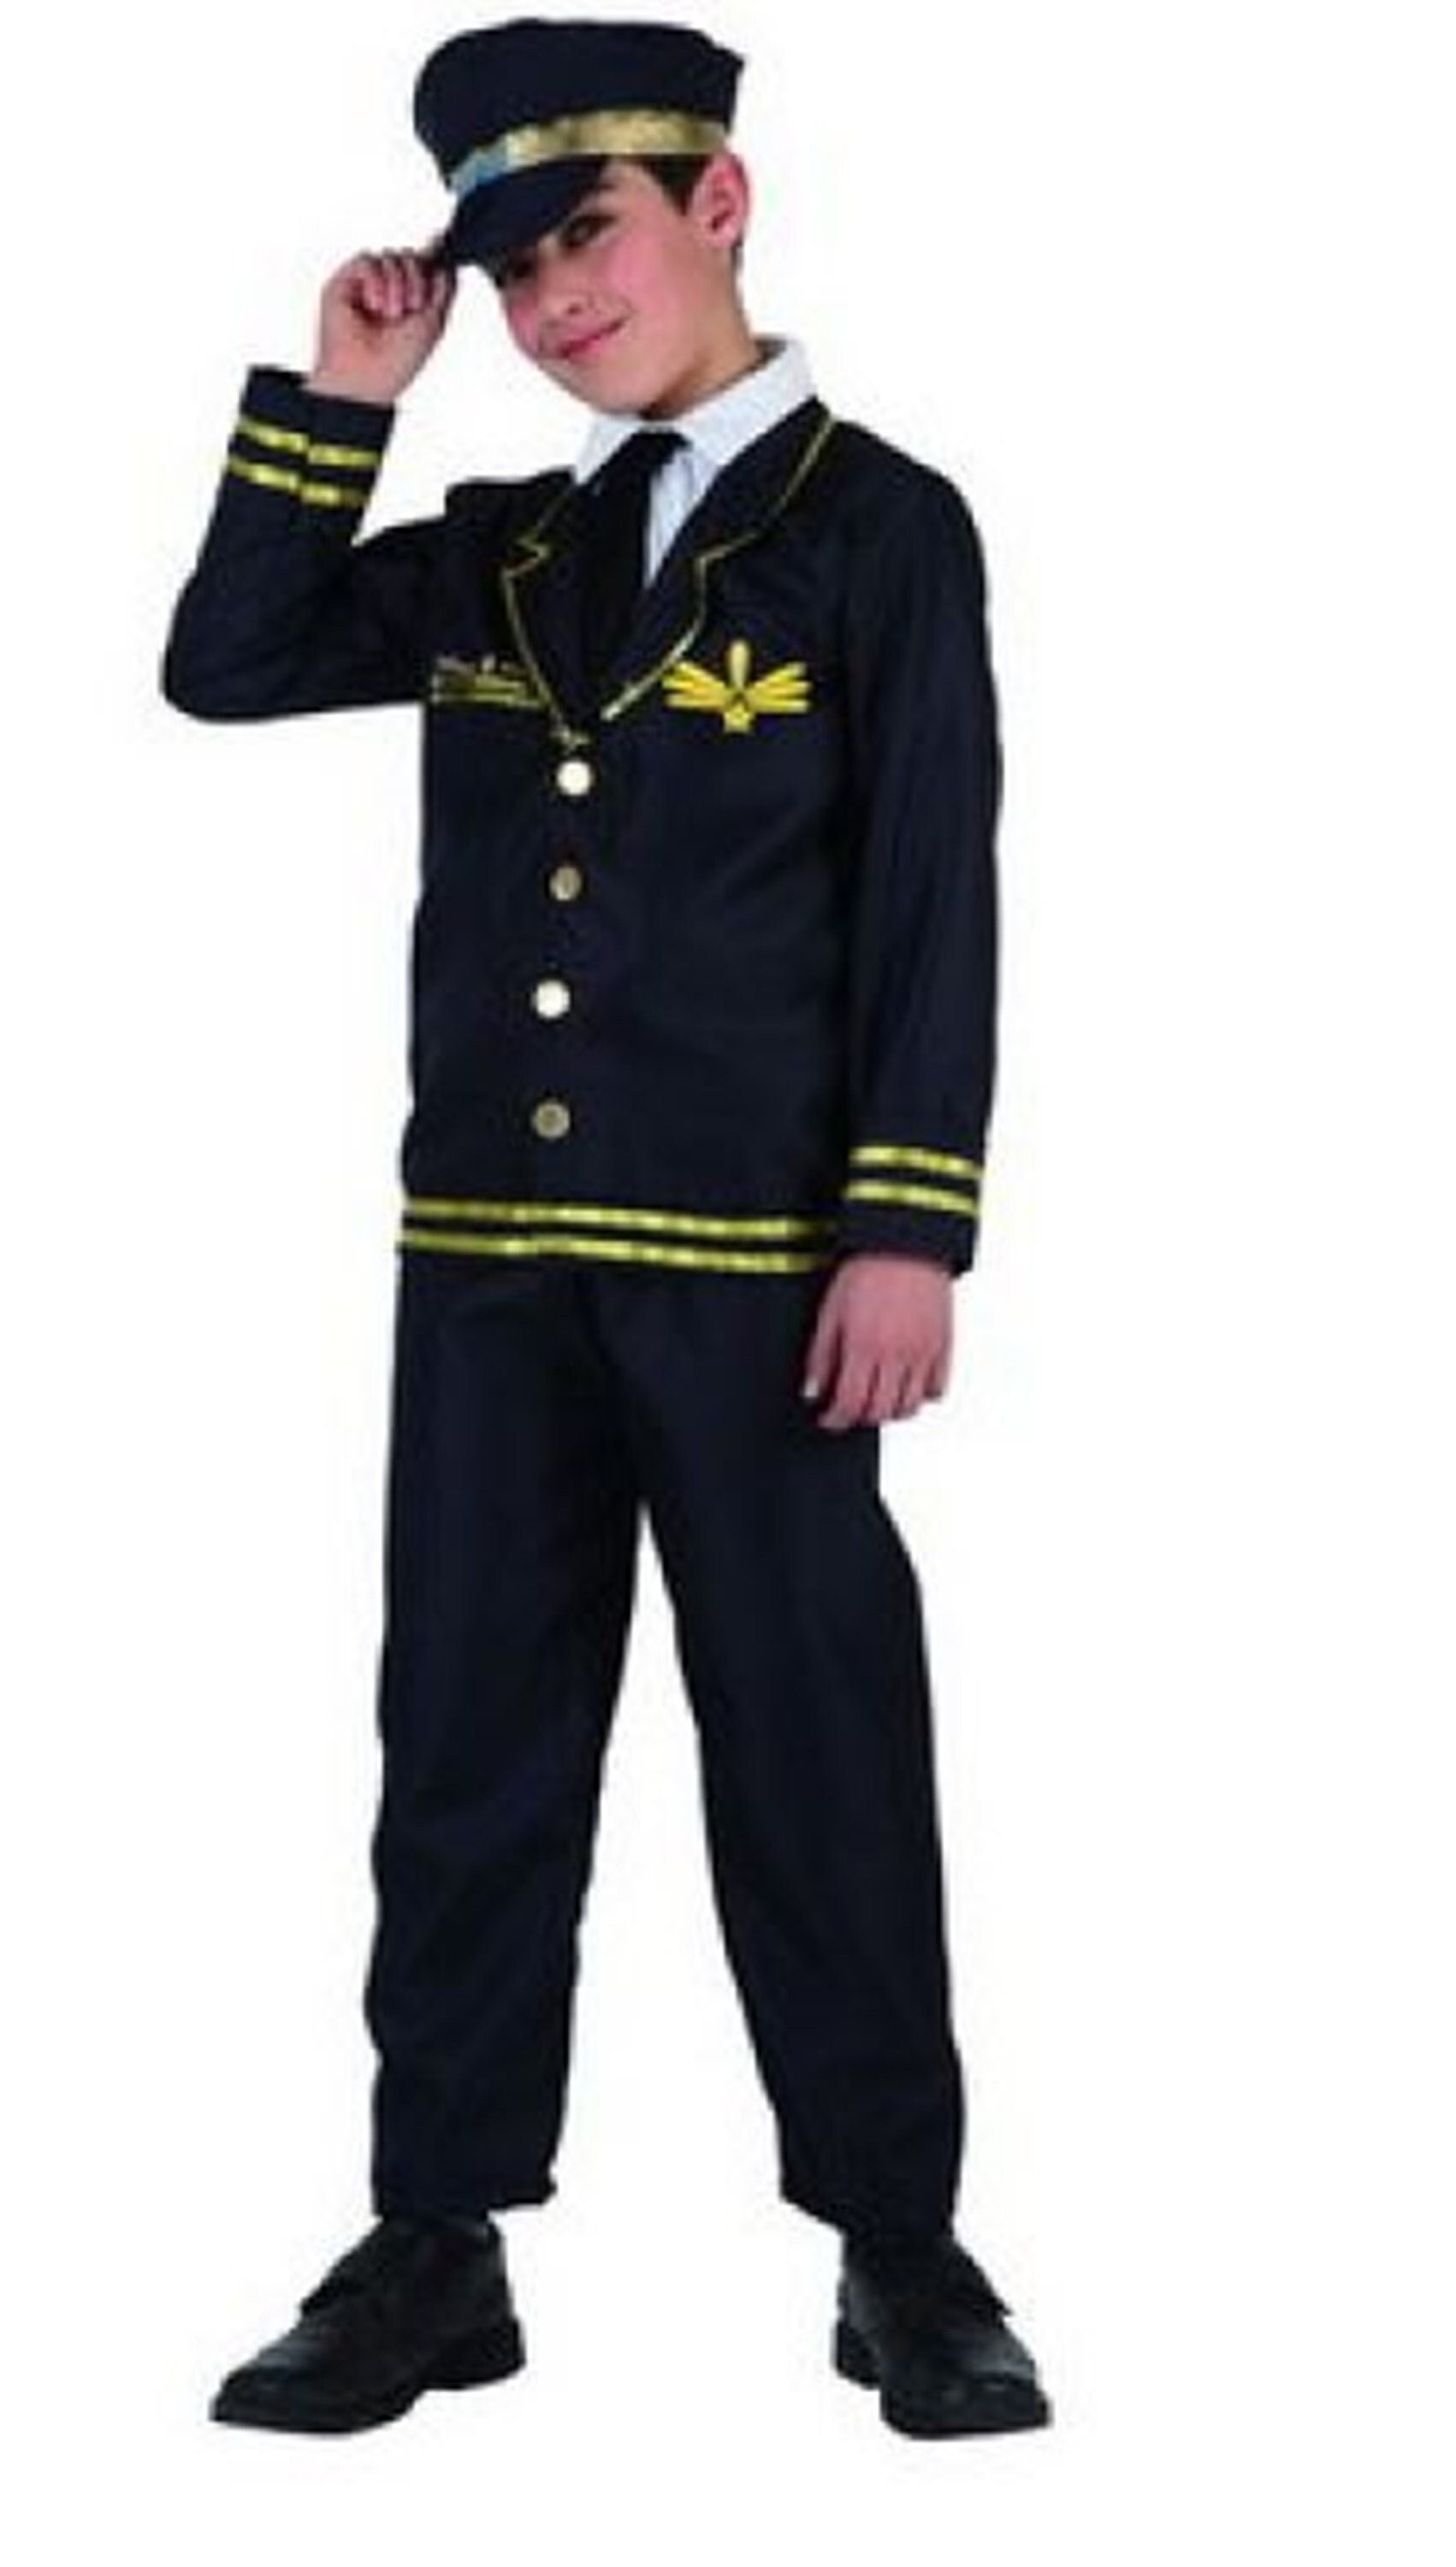 Dress Up America Pilot Costume for Kids - Airline Captain Uniform - Career  Day Dress Up for Children